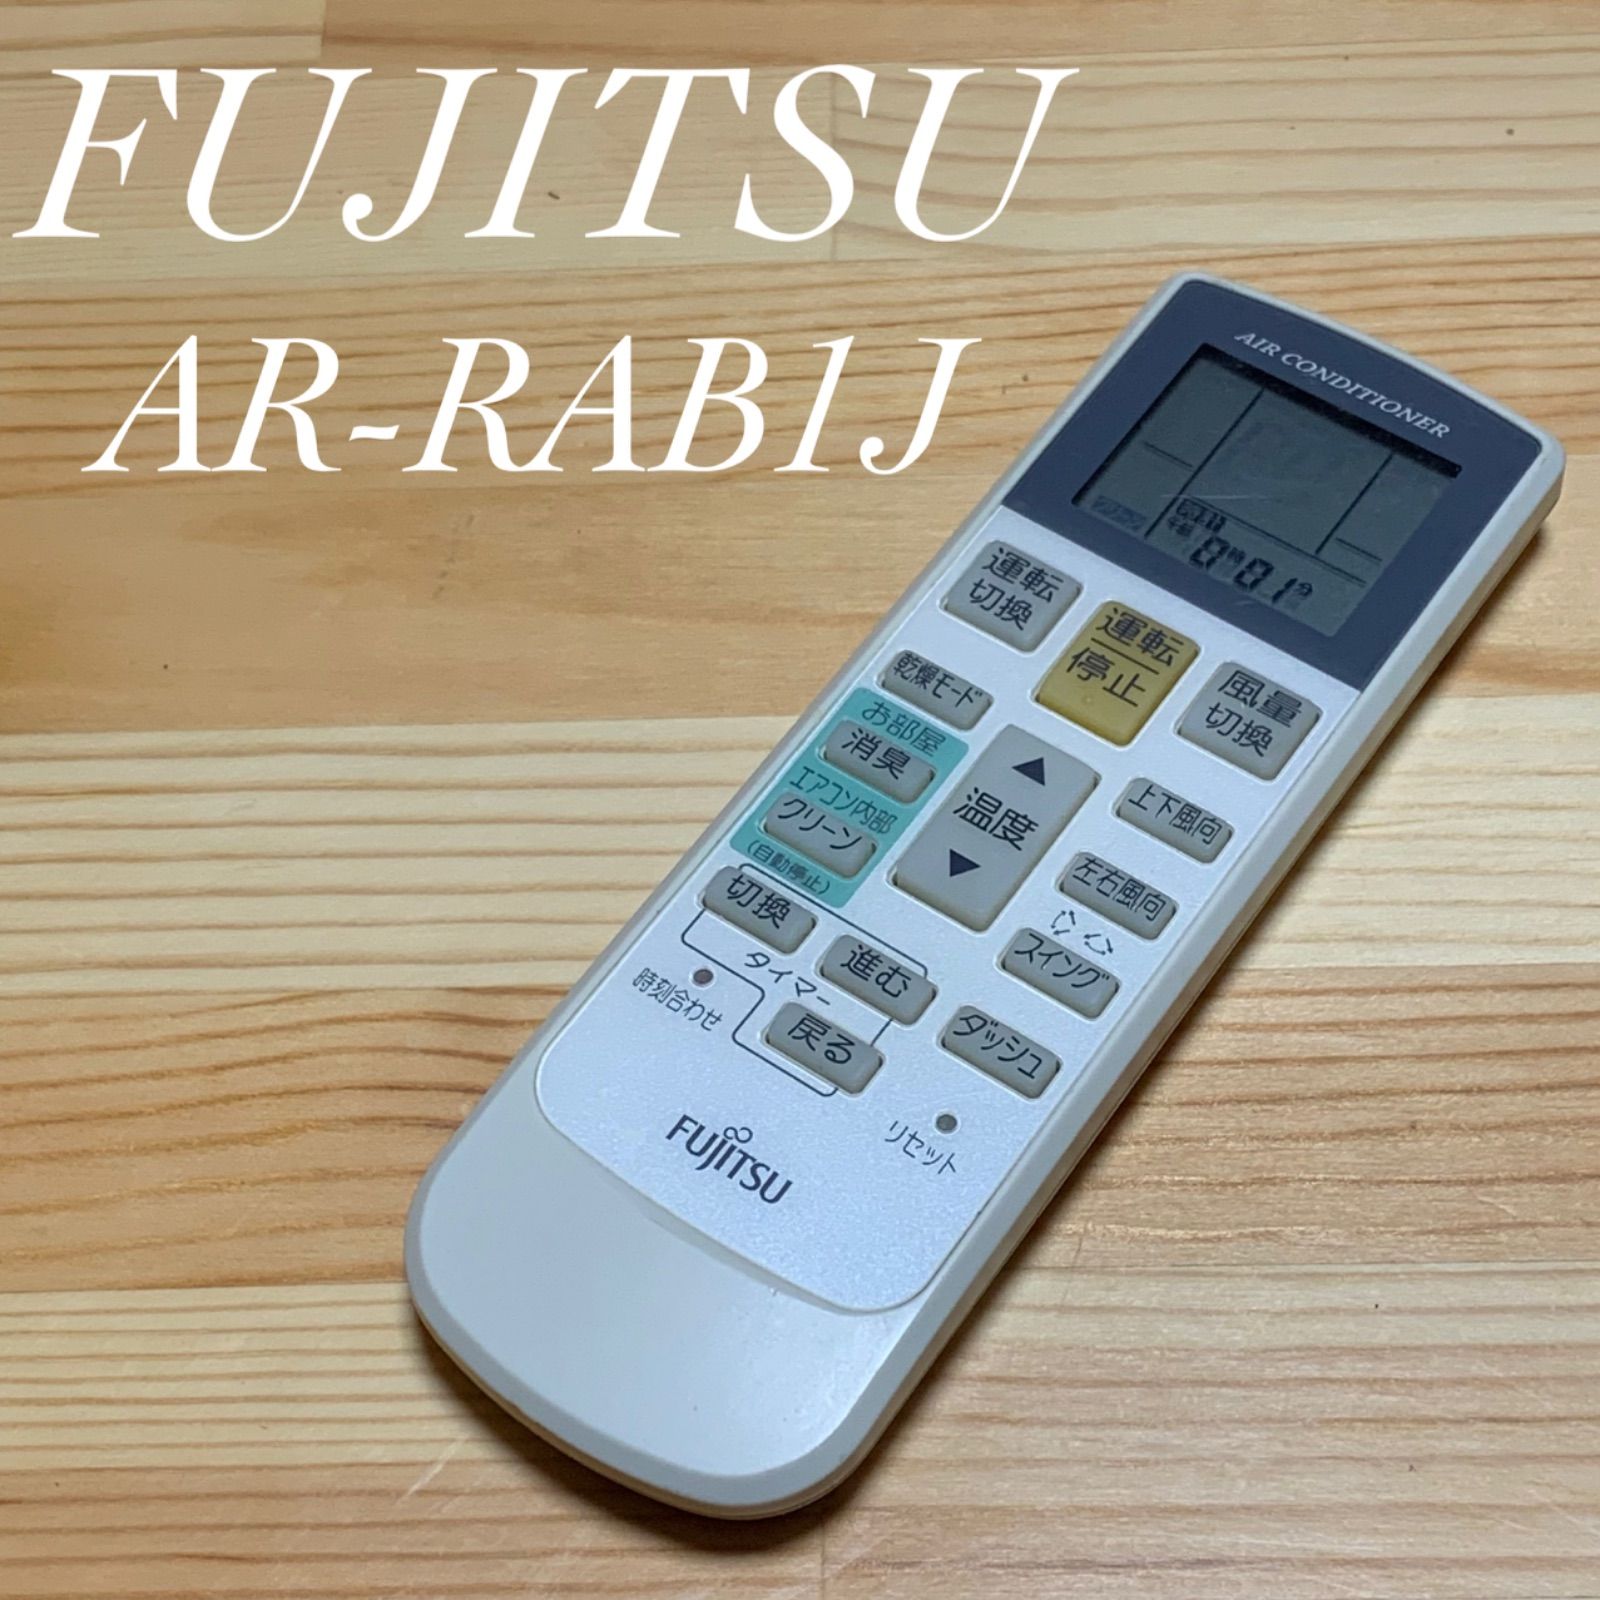 FUJITSUリモコン　AR-RAB1J